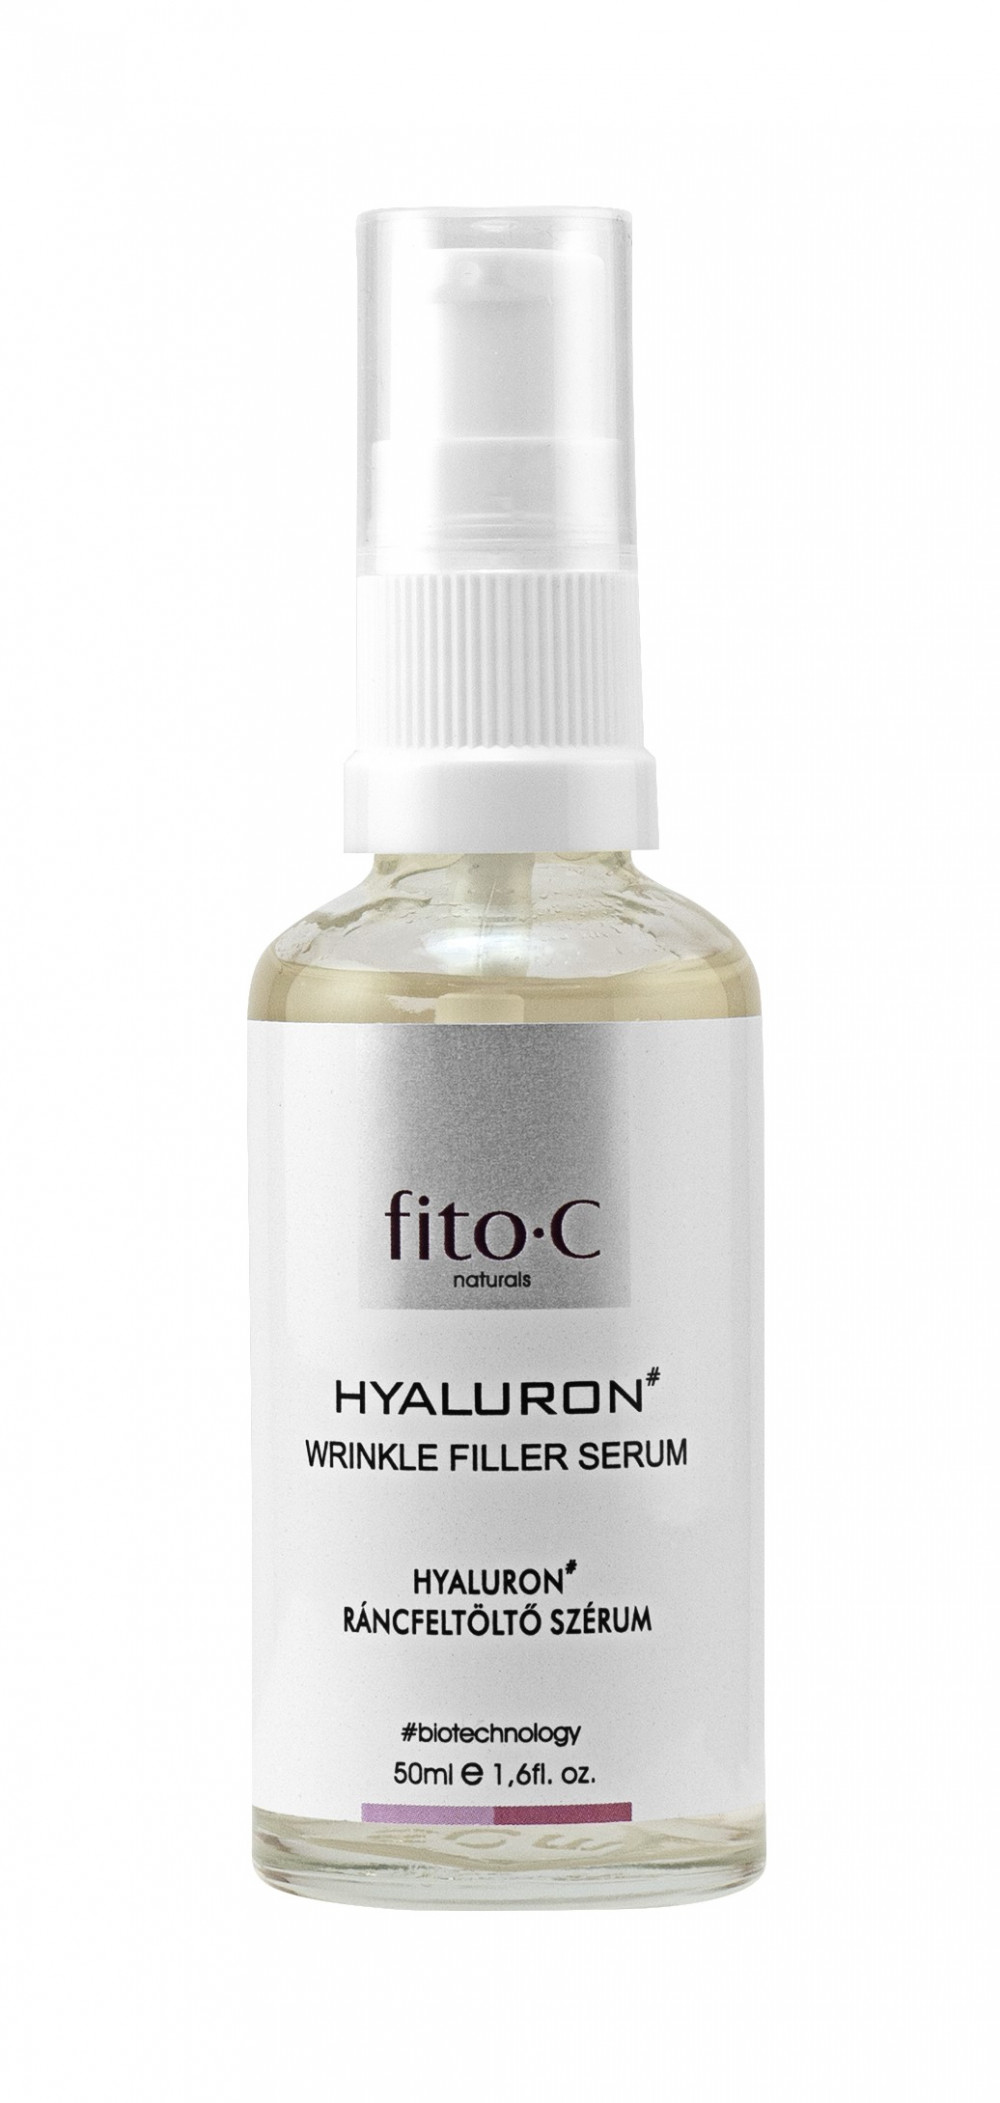 fito.C - Hyaluron Wrinkle Filler Serum - Hyaluron Ráncfeltöltő Szérum, 50ml